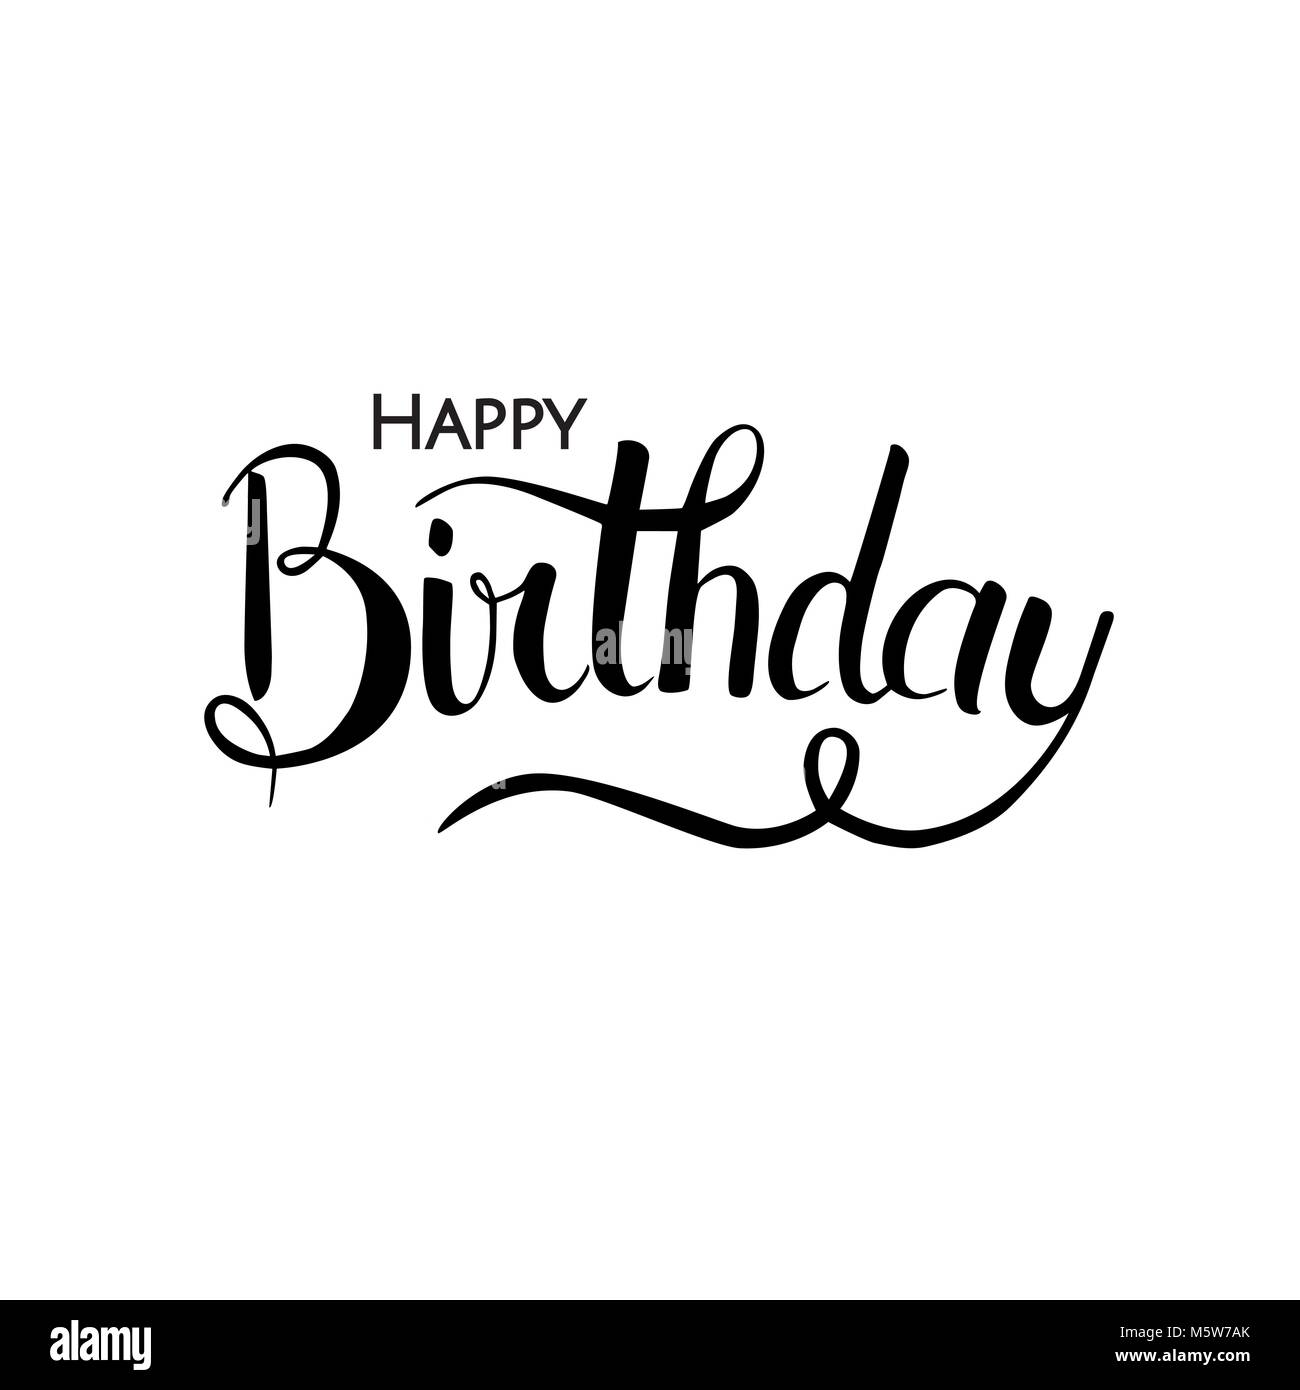 Happy Birthday Black and White Stock Photos & Images - Alamy